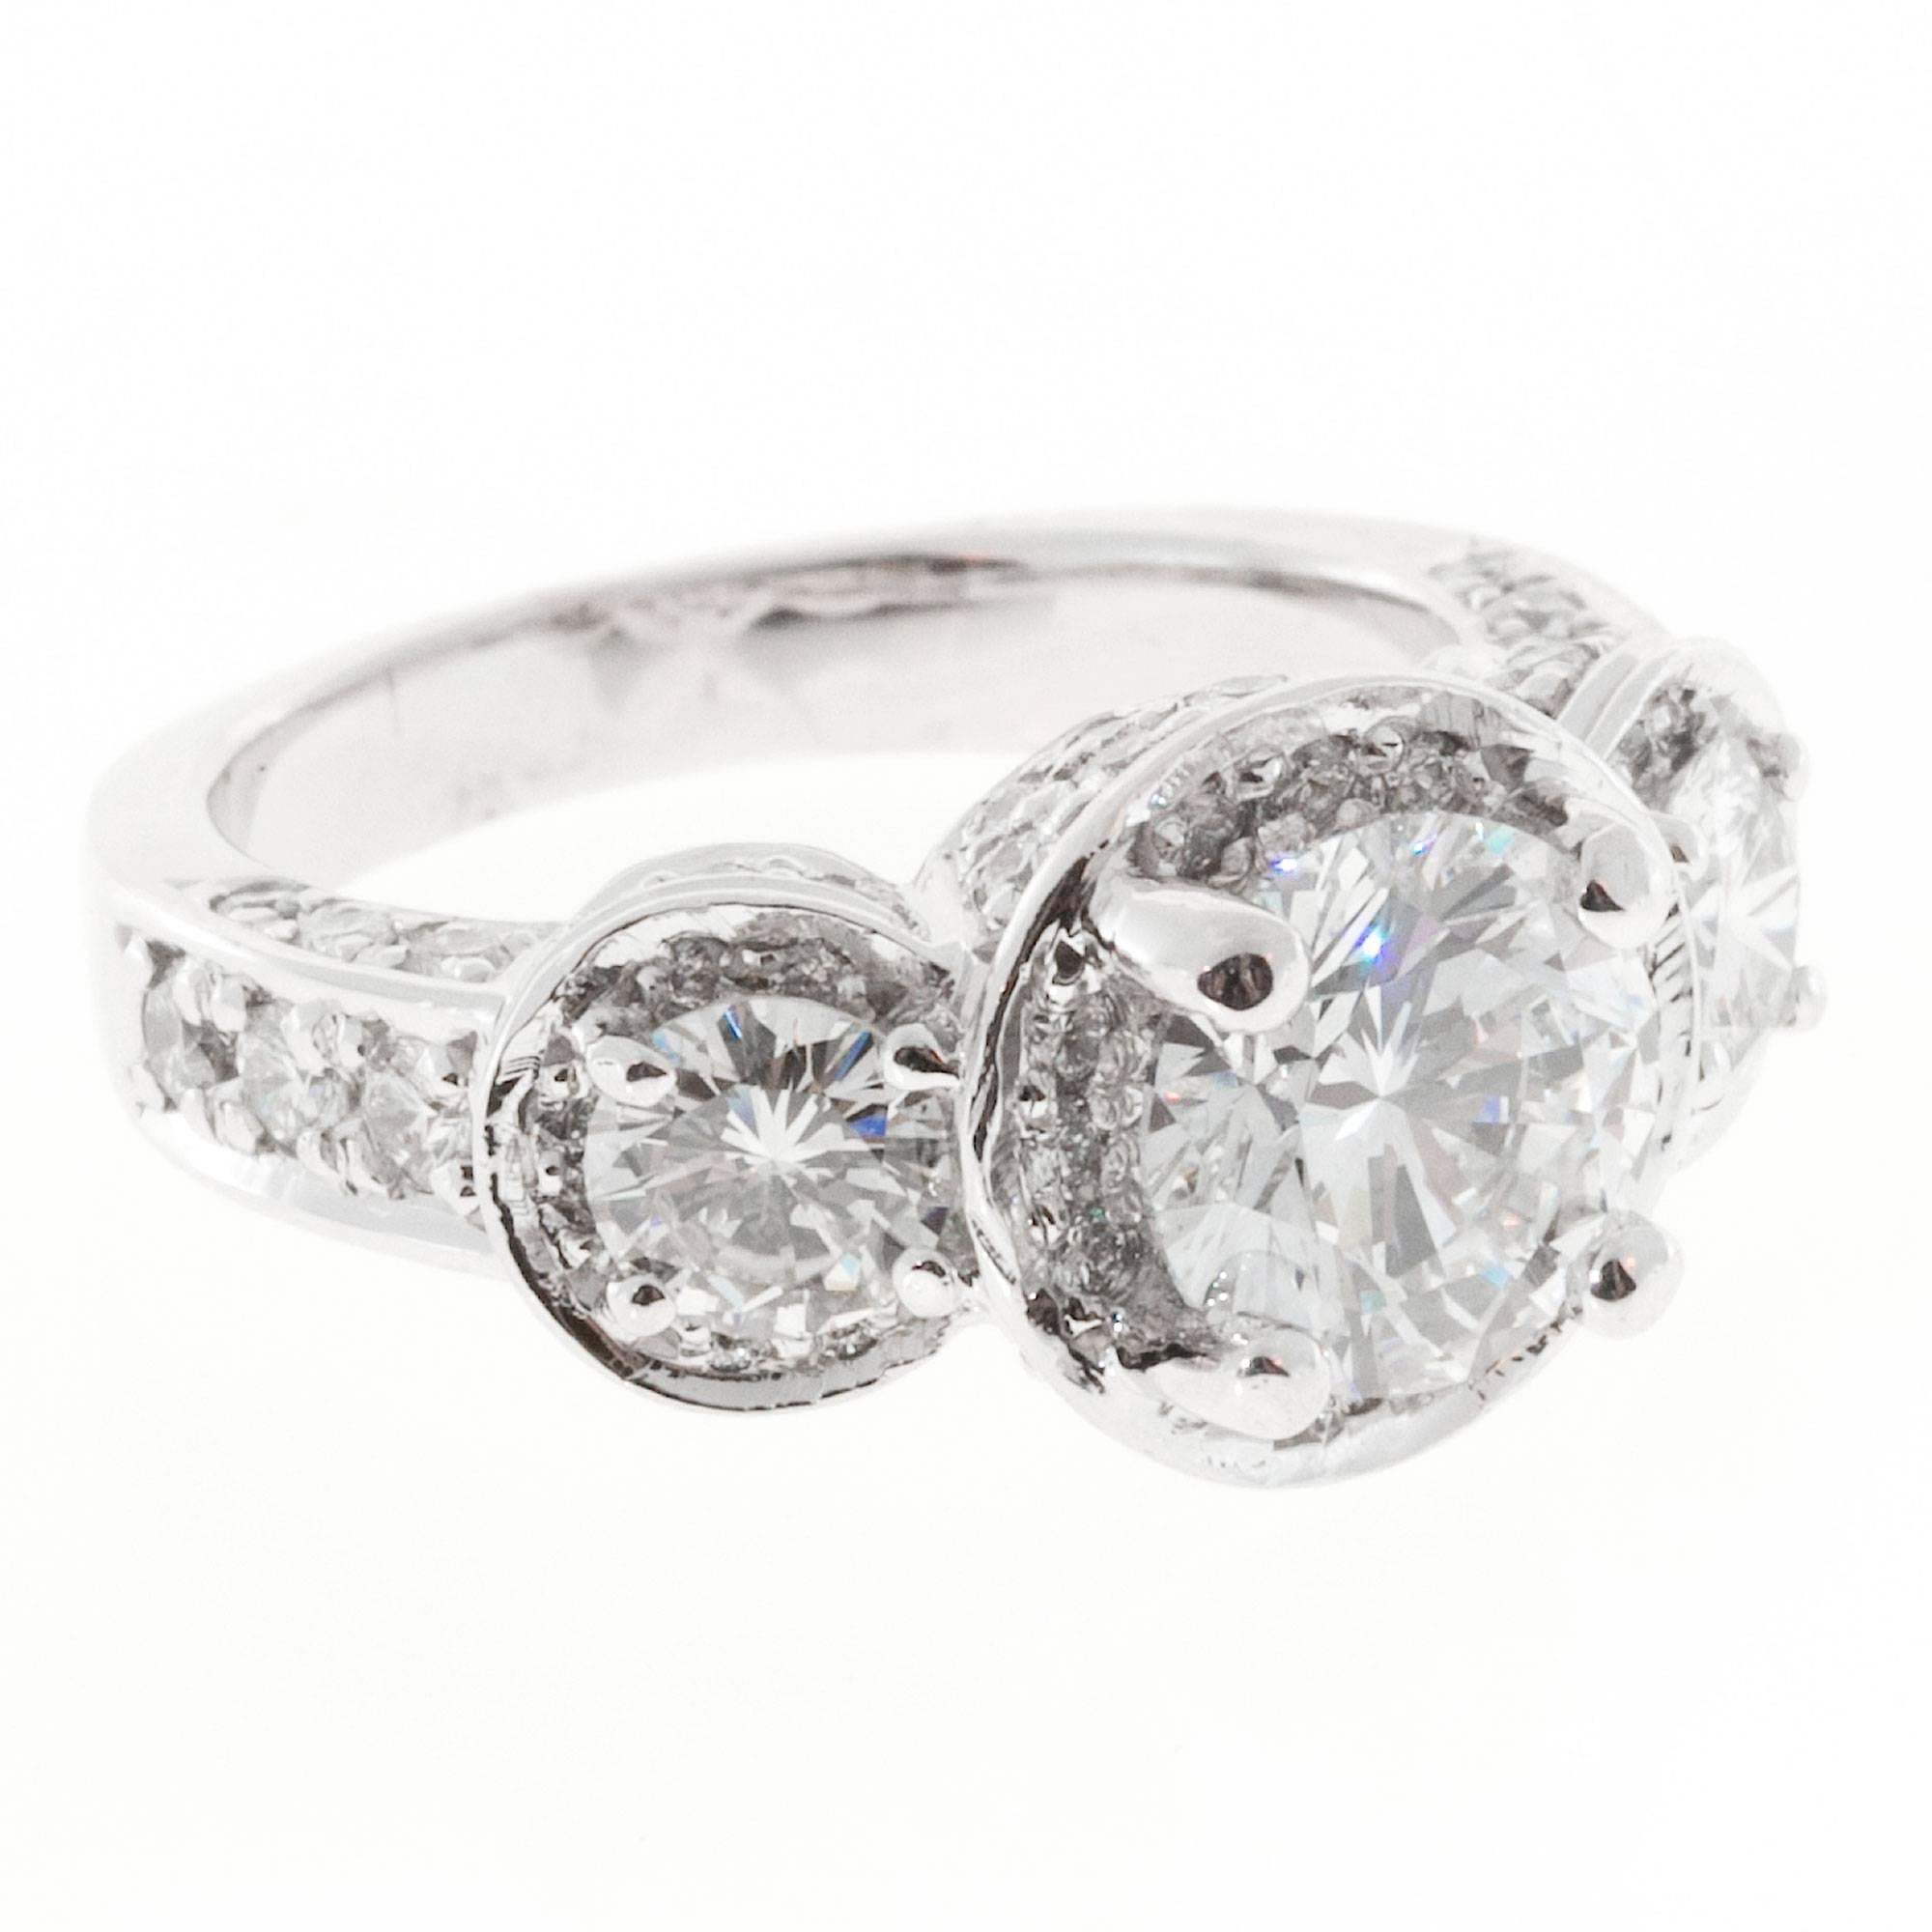 Gregg Ruth 3 stone Diamond pave platinum engagement ring.  Pave set with 72 full cut diamonds.

1 round diamond 1.65cts F, VS2 GIA Certified# 12163415
2 round diamonds approx.68cts. F, VS.
72 full cut diamonds, F, VS approx. 1.0cts total